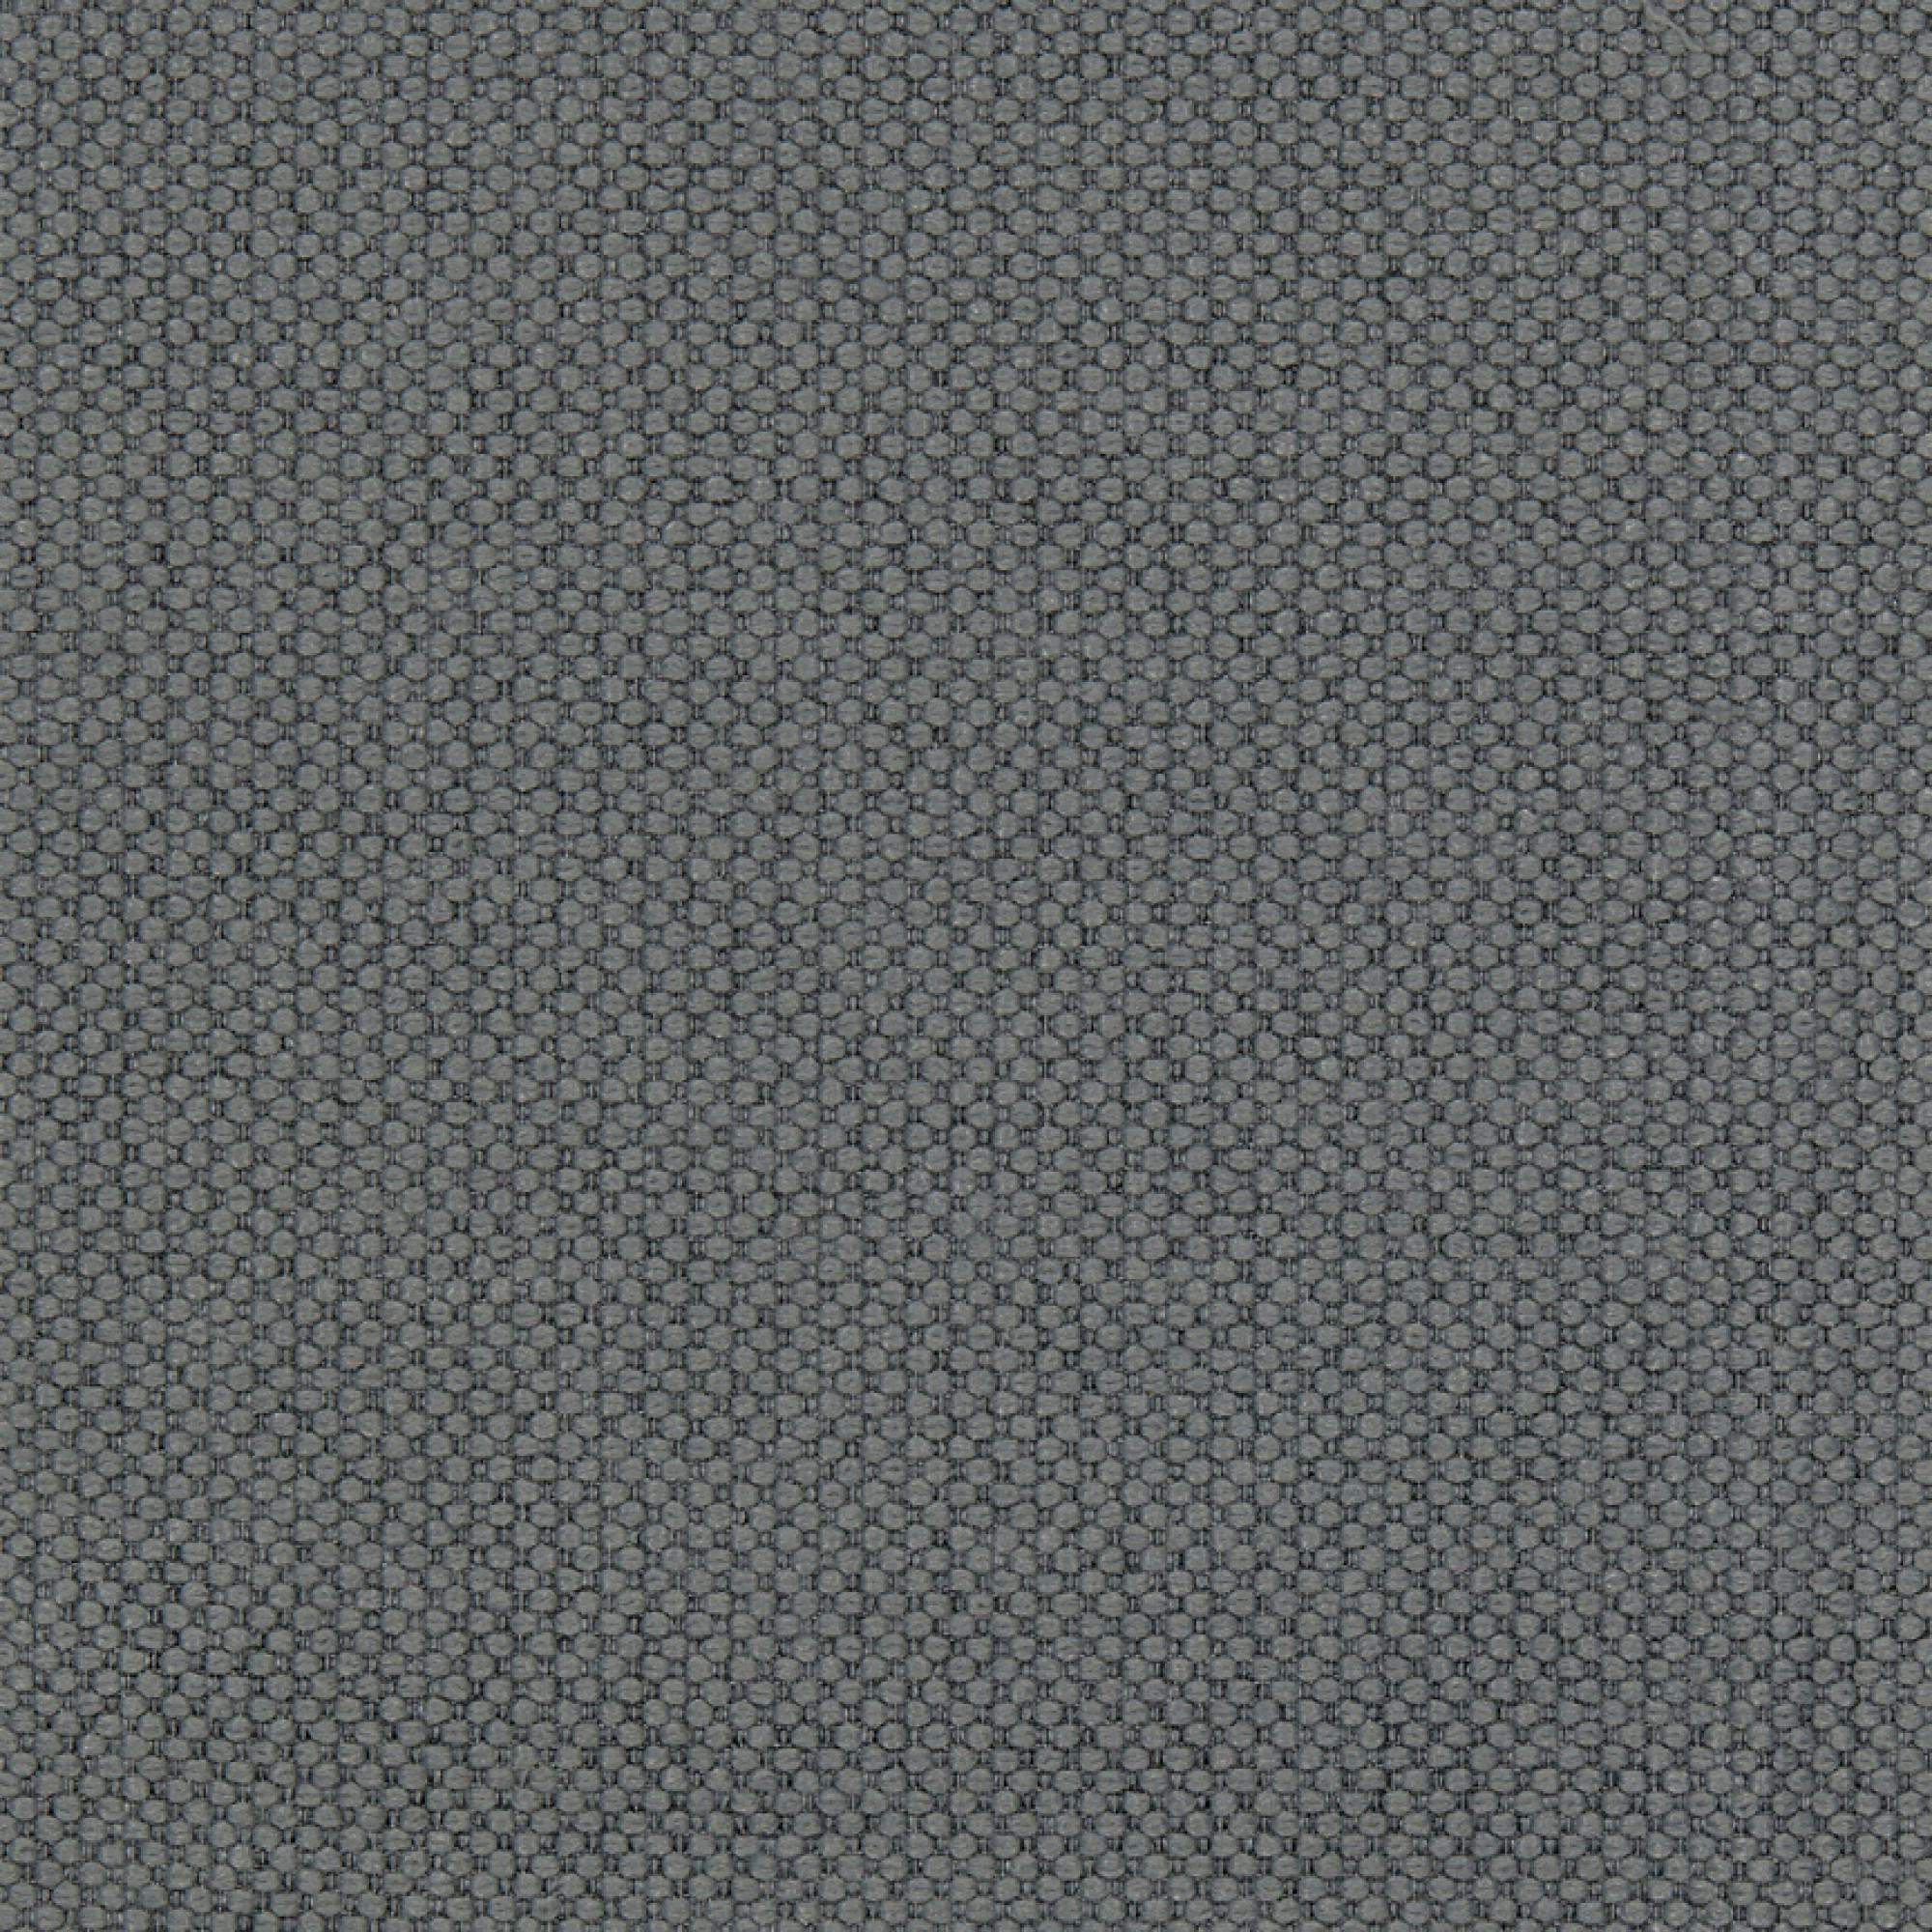 Fabric sample Merit 0003 grey